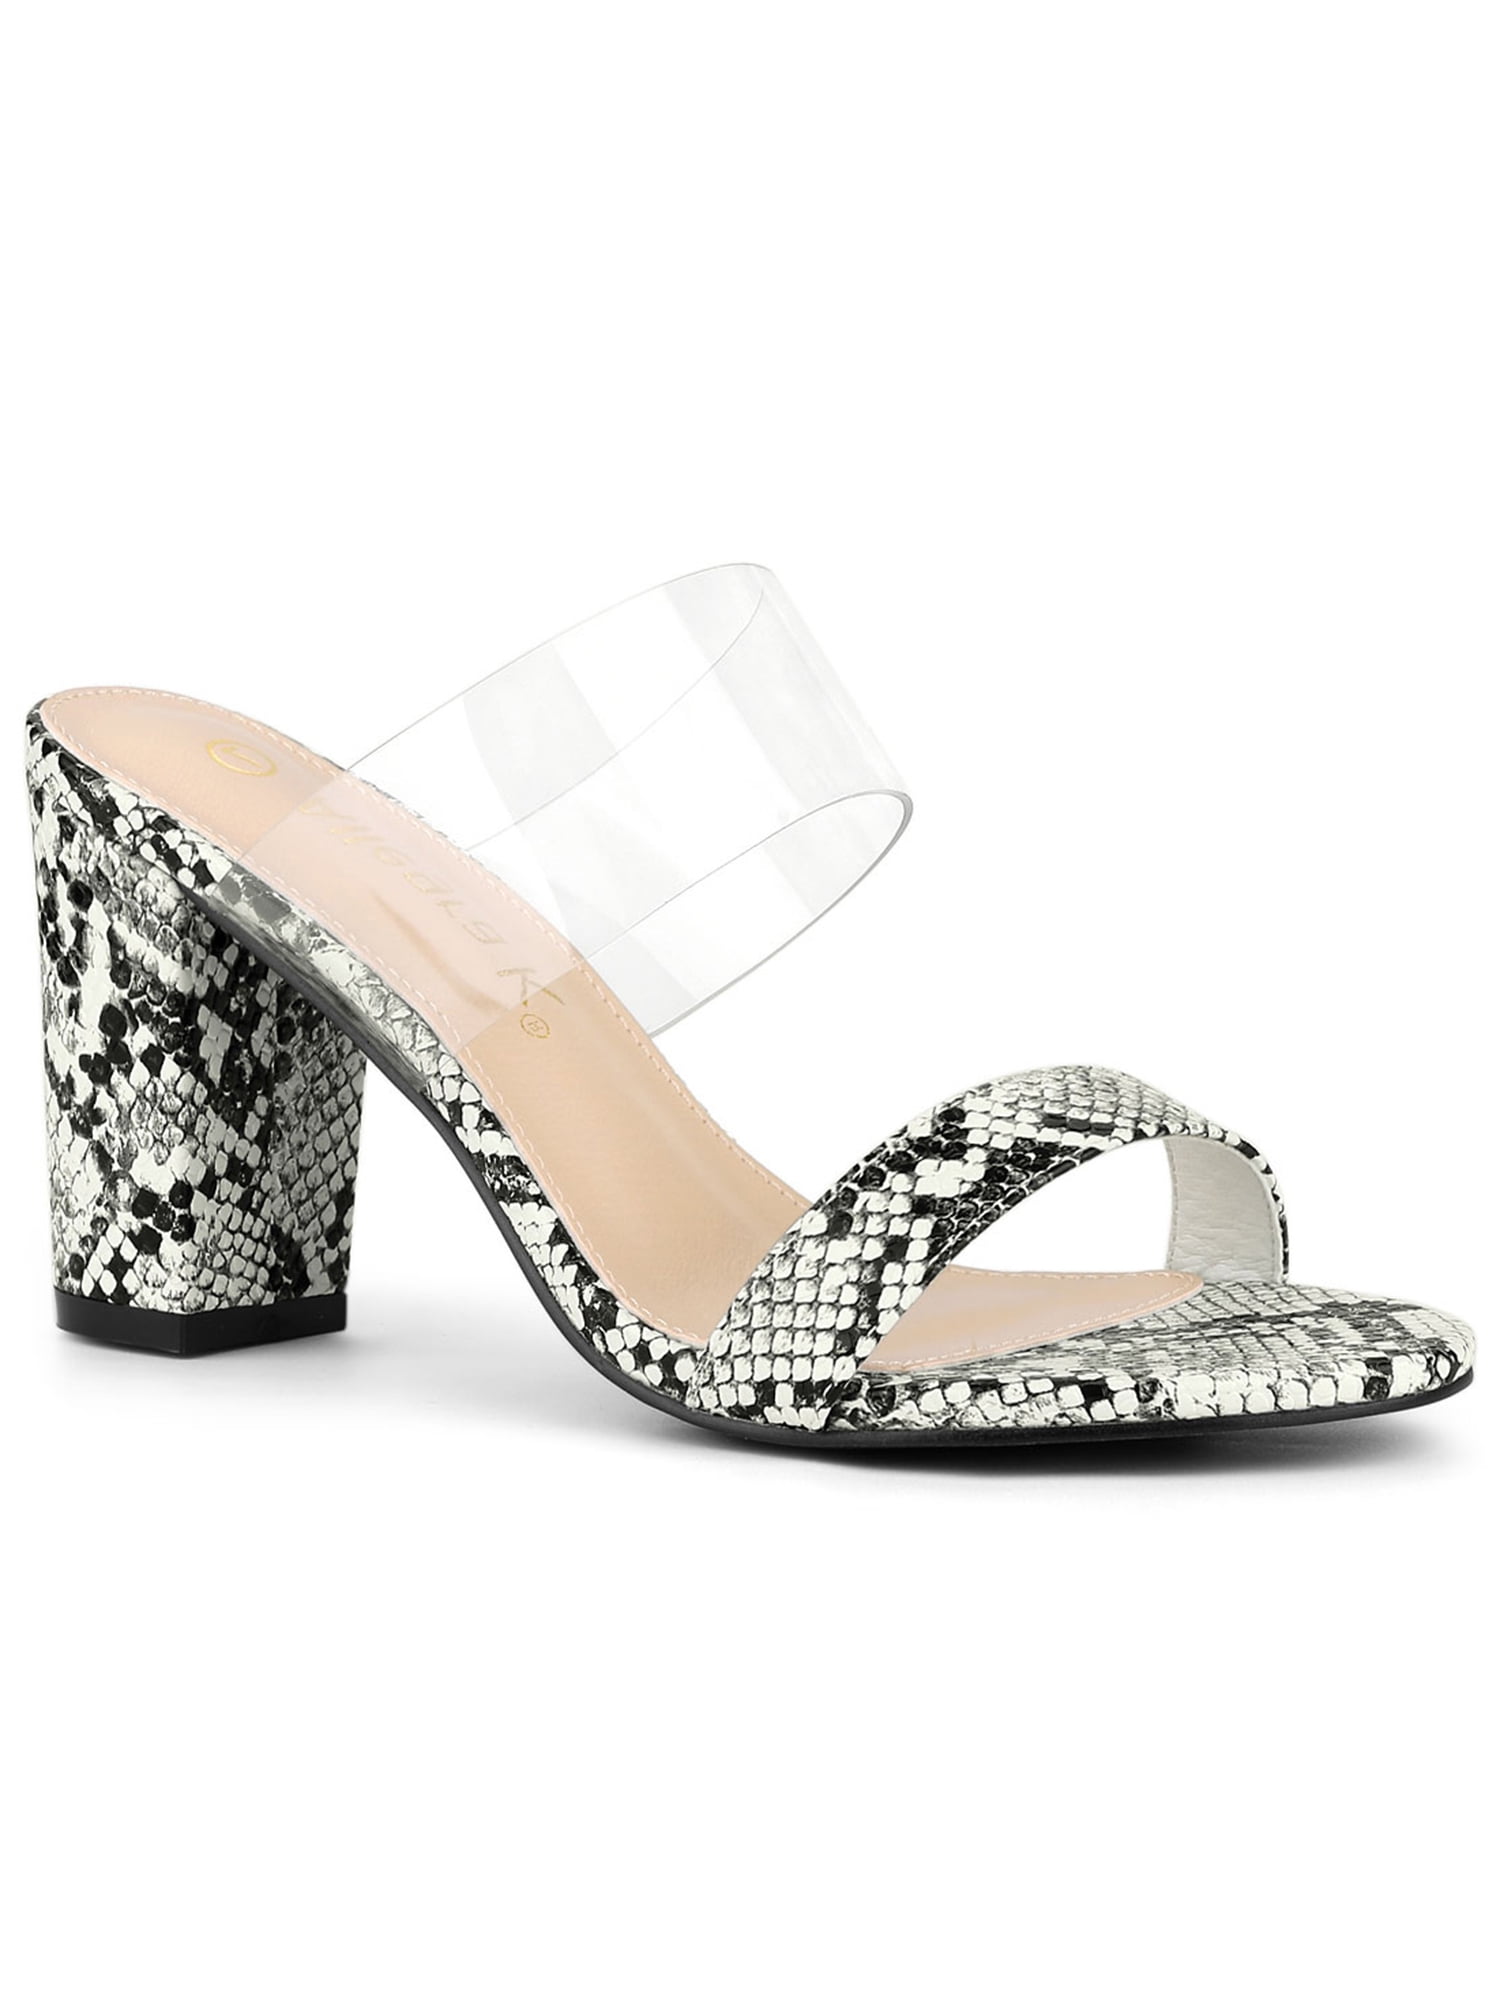 Steve Madden Kaylee Natural White Grey Snake Skin Print Heels Size 6.5  Womens | eBay